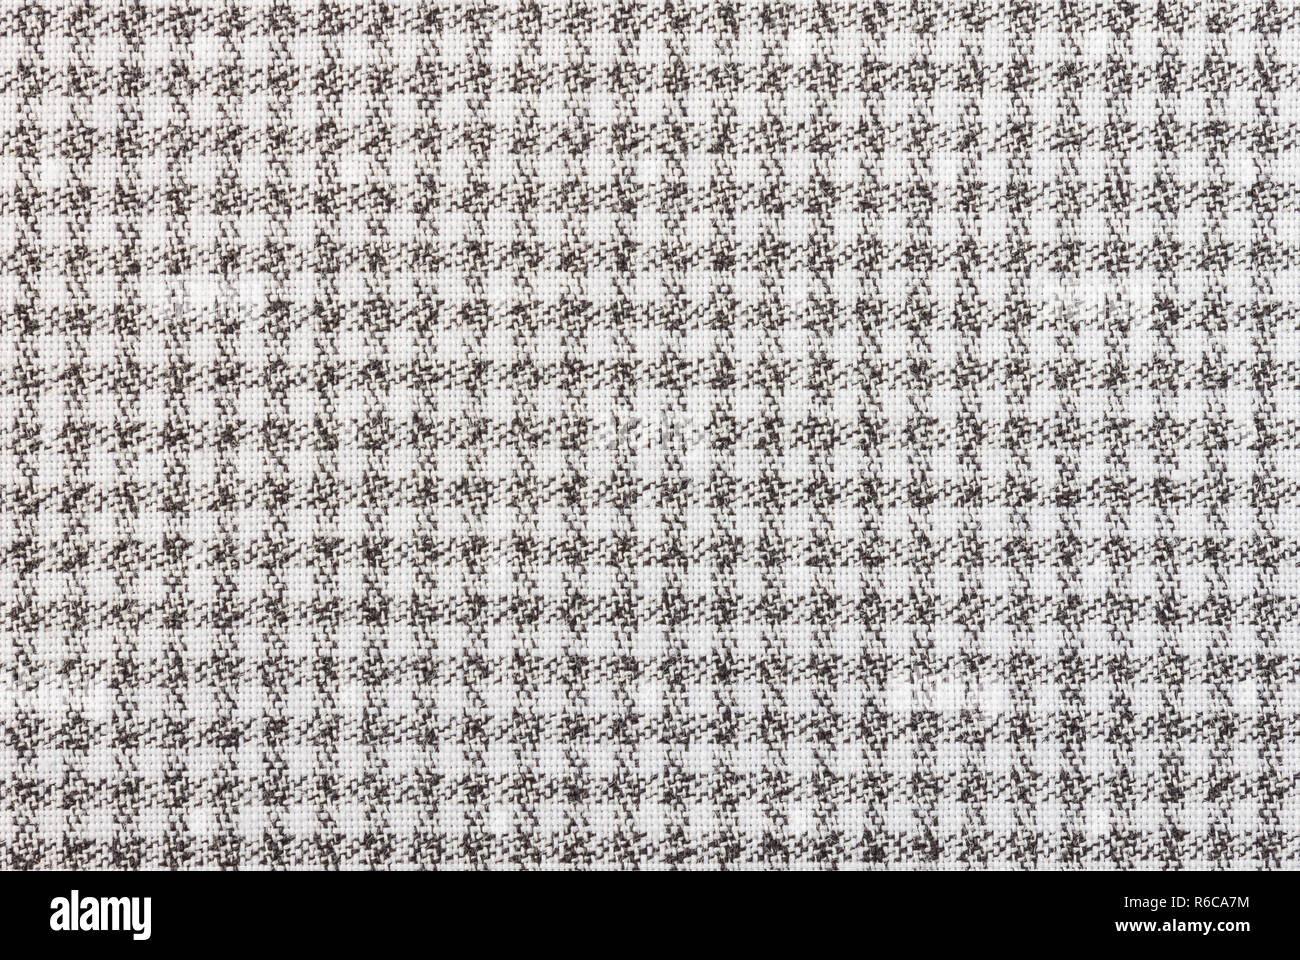 Black And White Tischdecke Stoff Textur Muster Hintergrund. Stoff, Stoff  Hintergrund, Stoffmuster. Tischdecke Textur. Tischdecke Stockfotografie -  Alamy